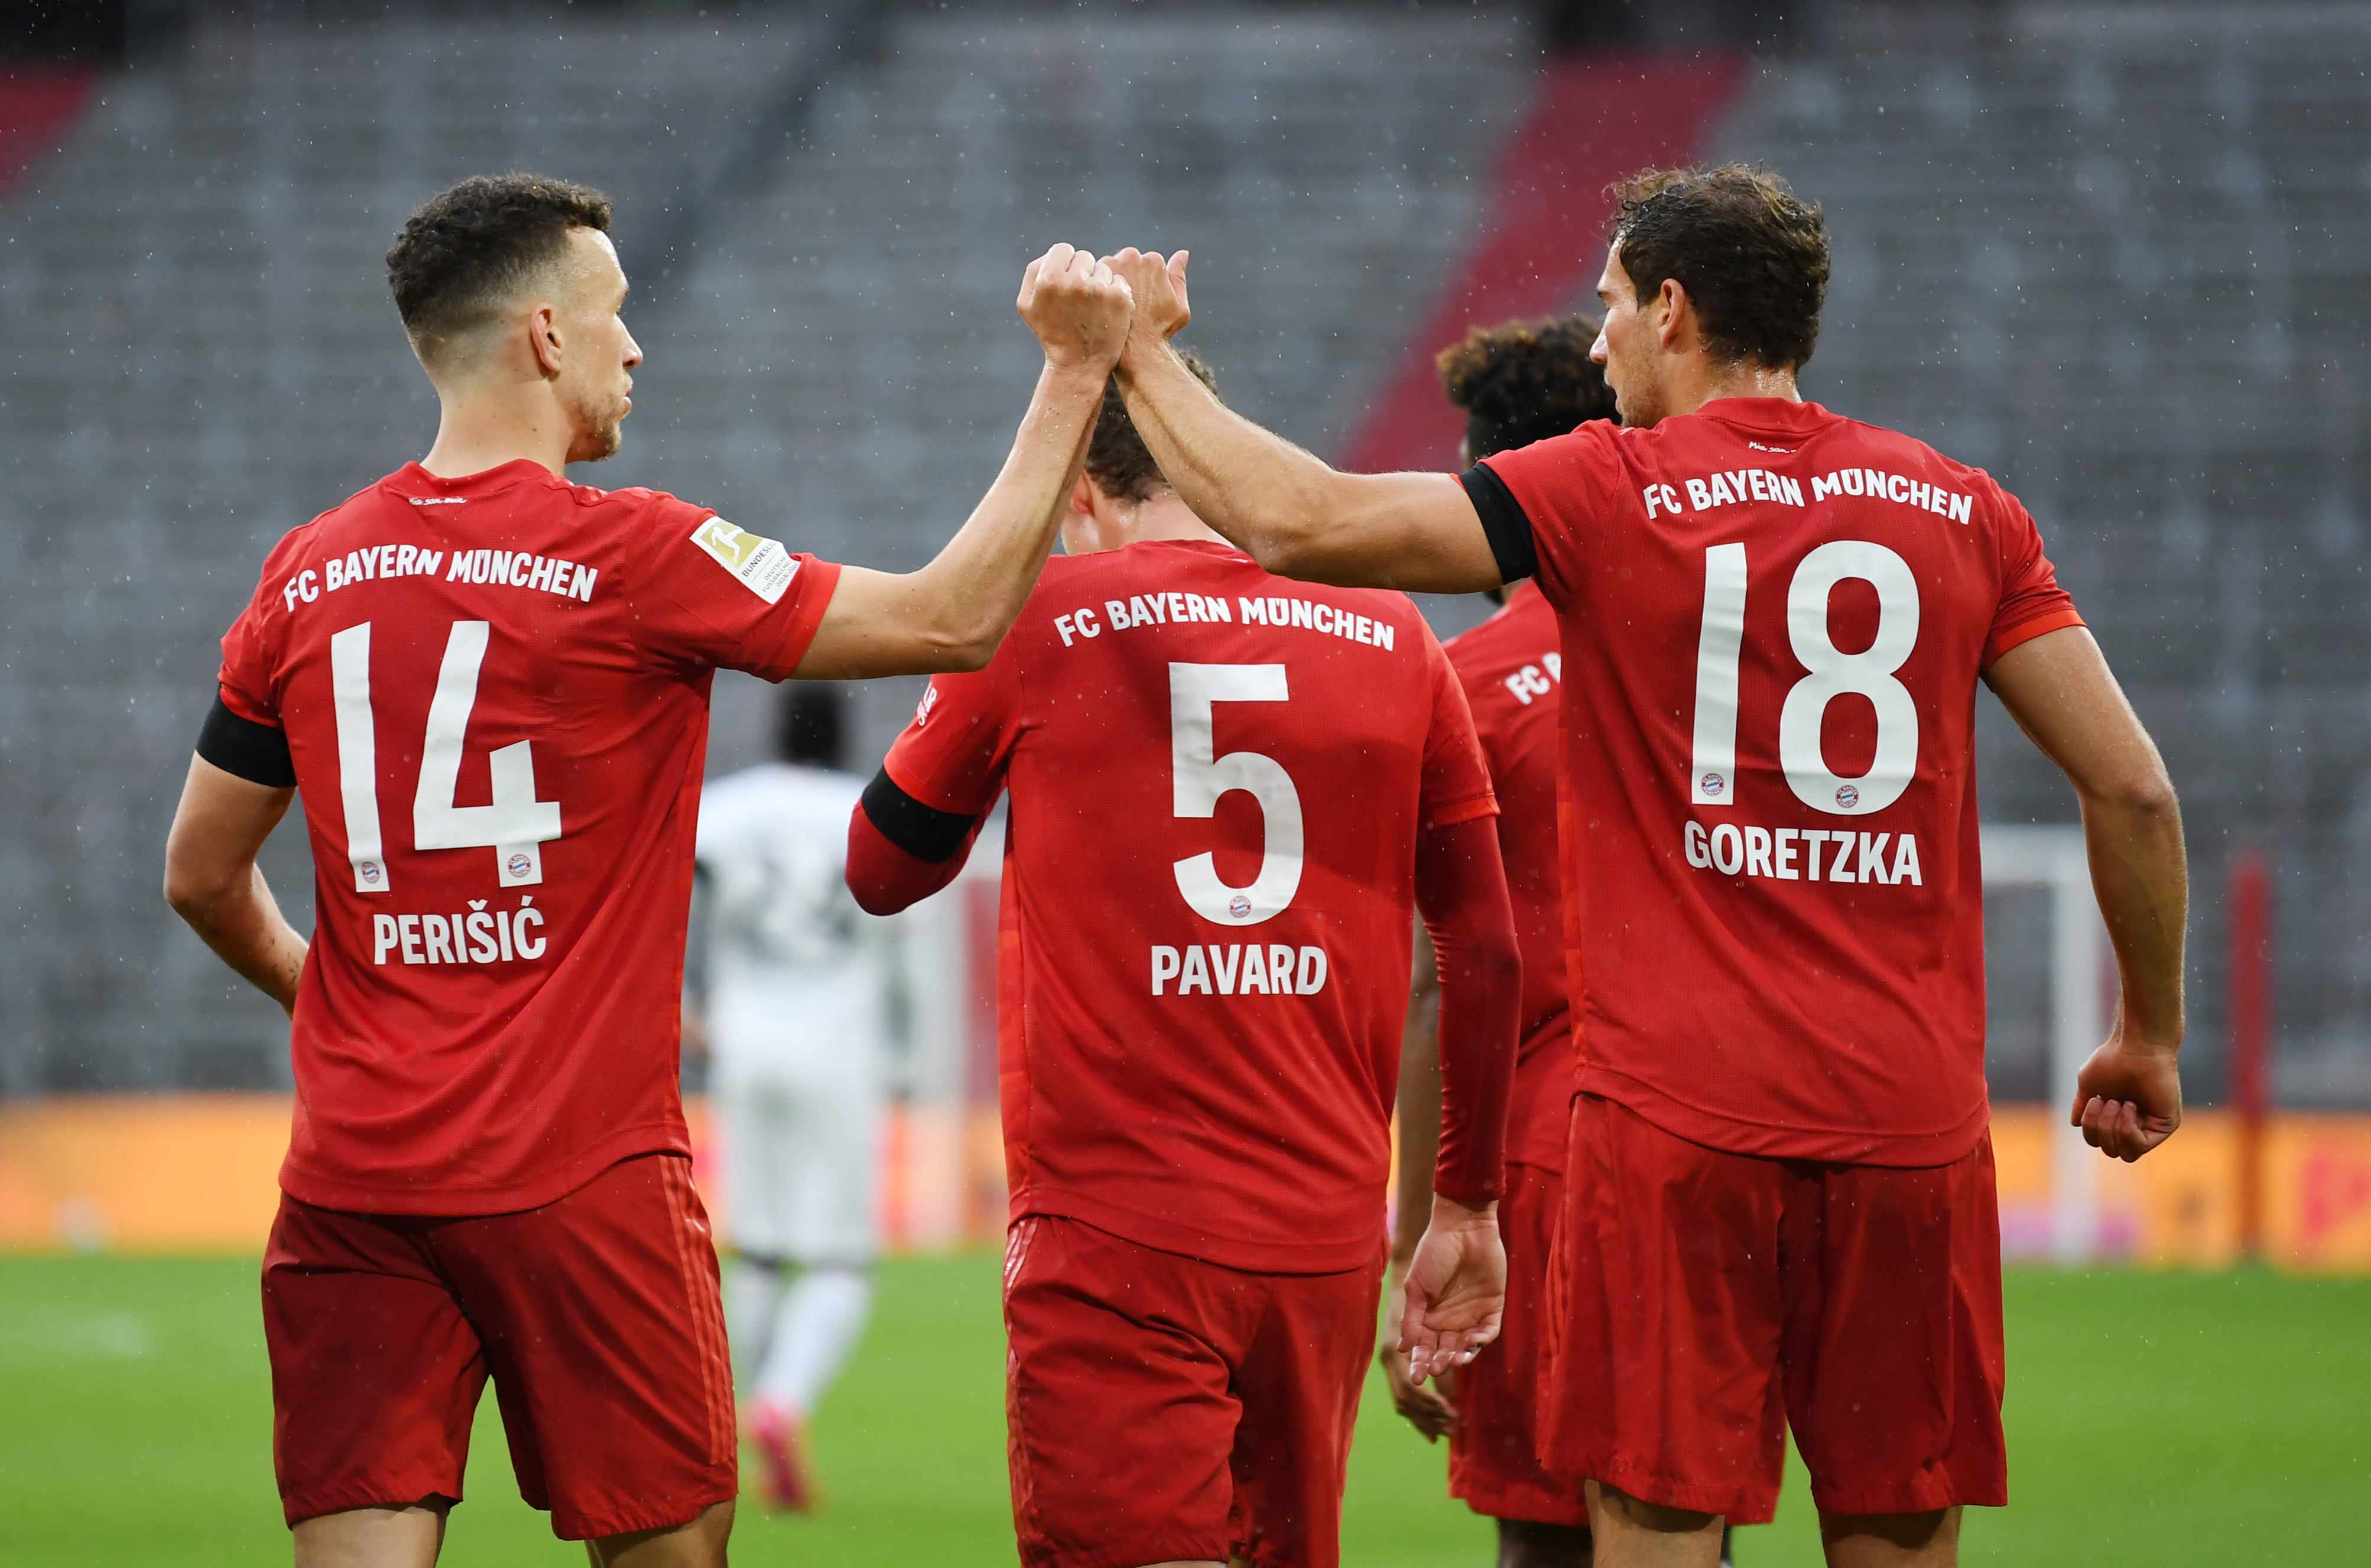 Bayern Munchen -  Eintracht Frankfurt 4-2, ACUM, pe Digi Sport 1. Meci de 5 stele pe Allianz Arena